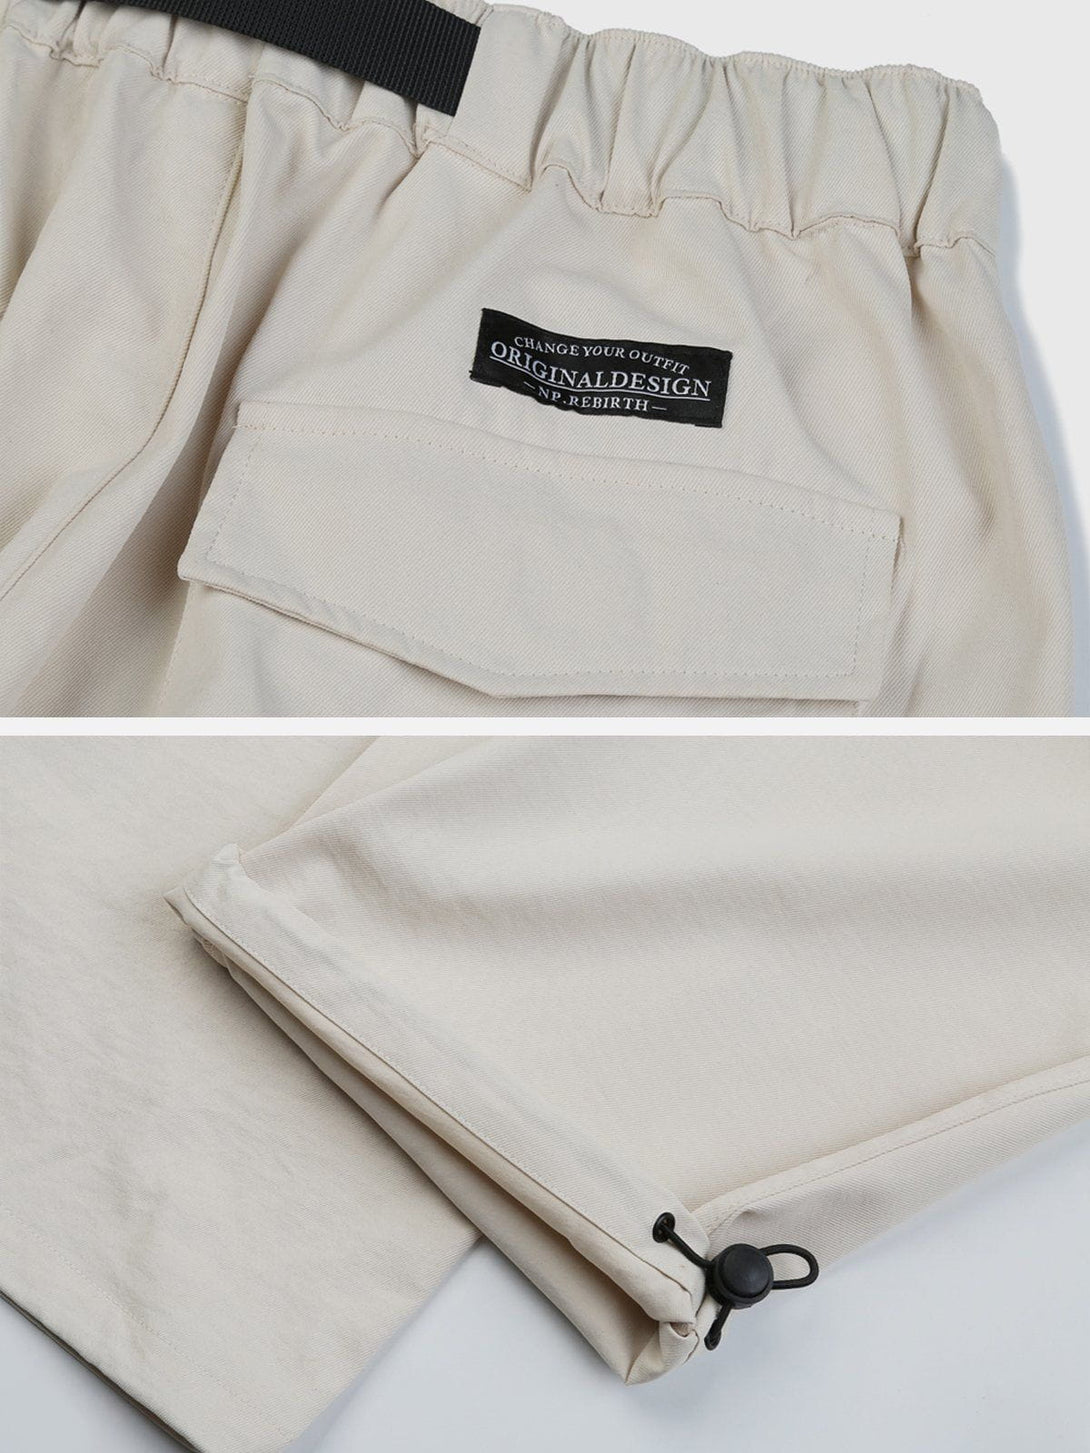 Majesda® - Multi-pocket Webbing Cargo Pants outfit ideas streetwear fashion